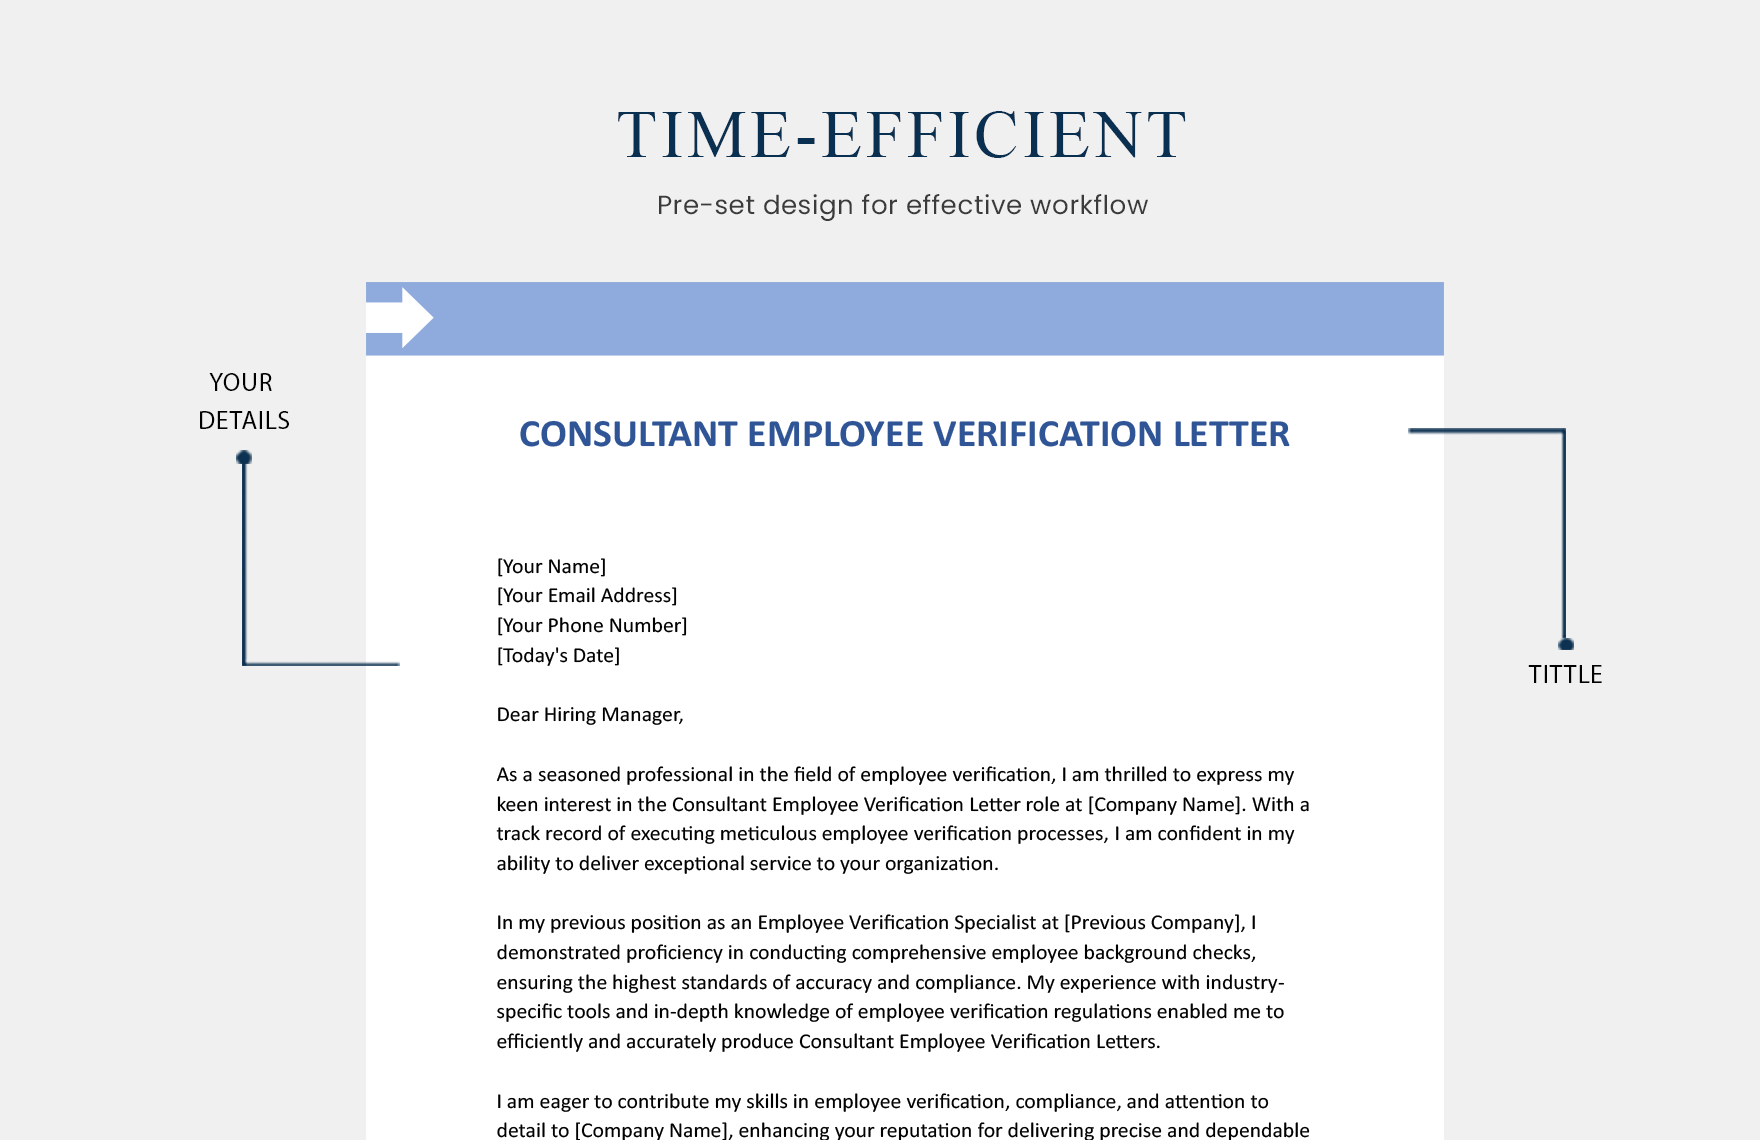 Consultant Employee Verification Letter